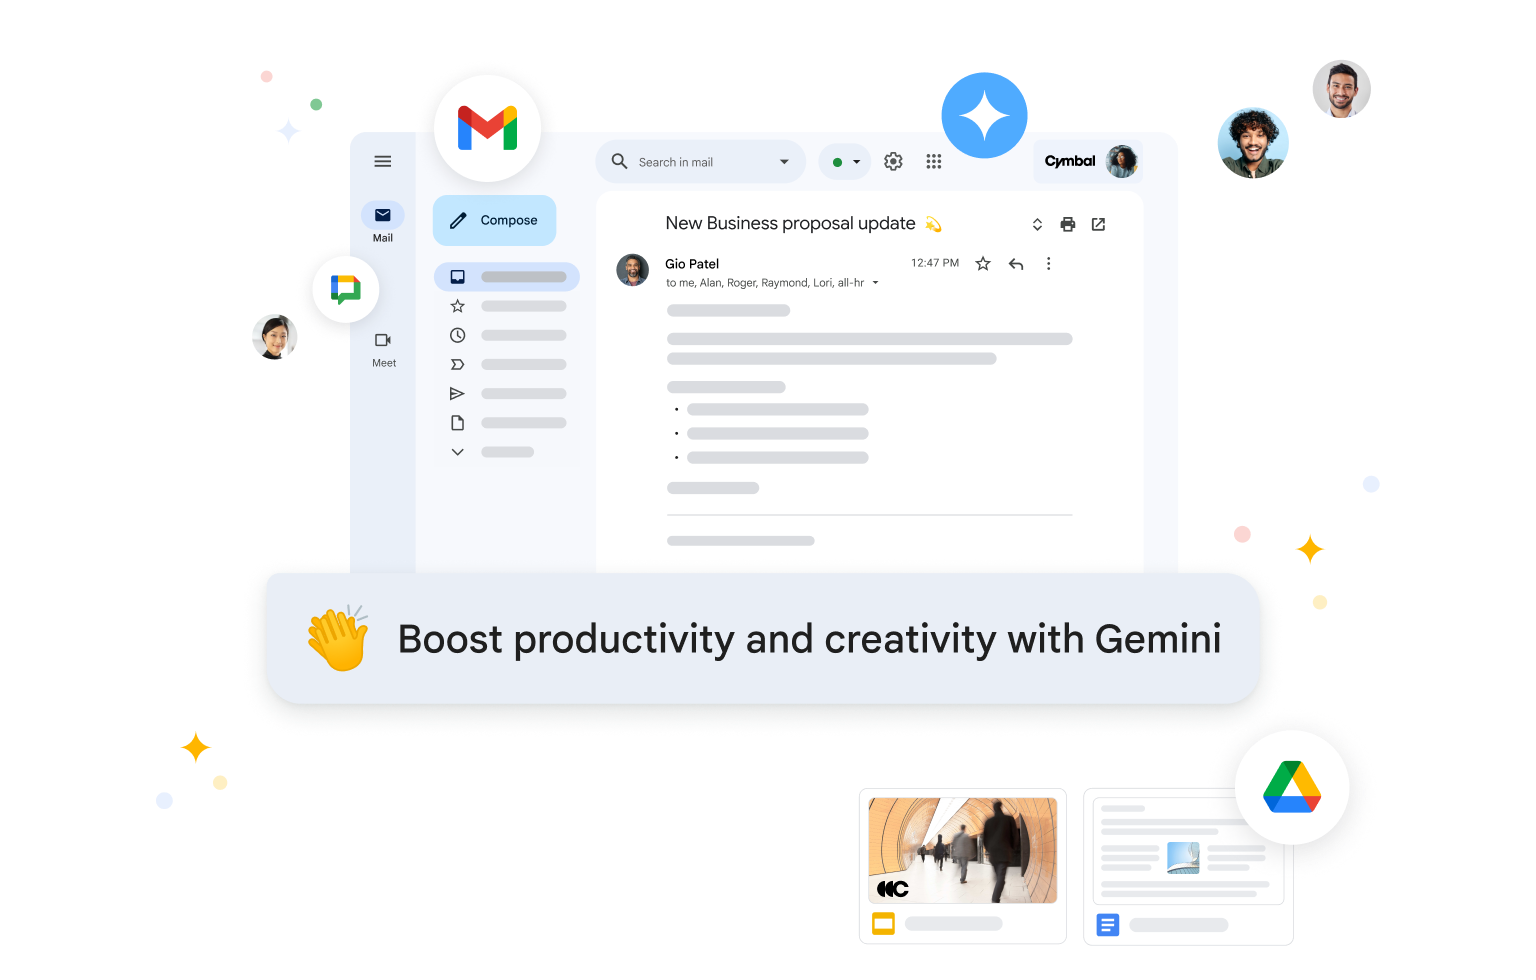 Workspace 专用 Gemini 可在 Gmail 中总结电子邮件内容并提供回复建议，帮助提高工作效率。